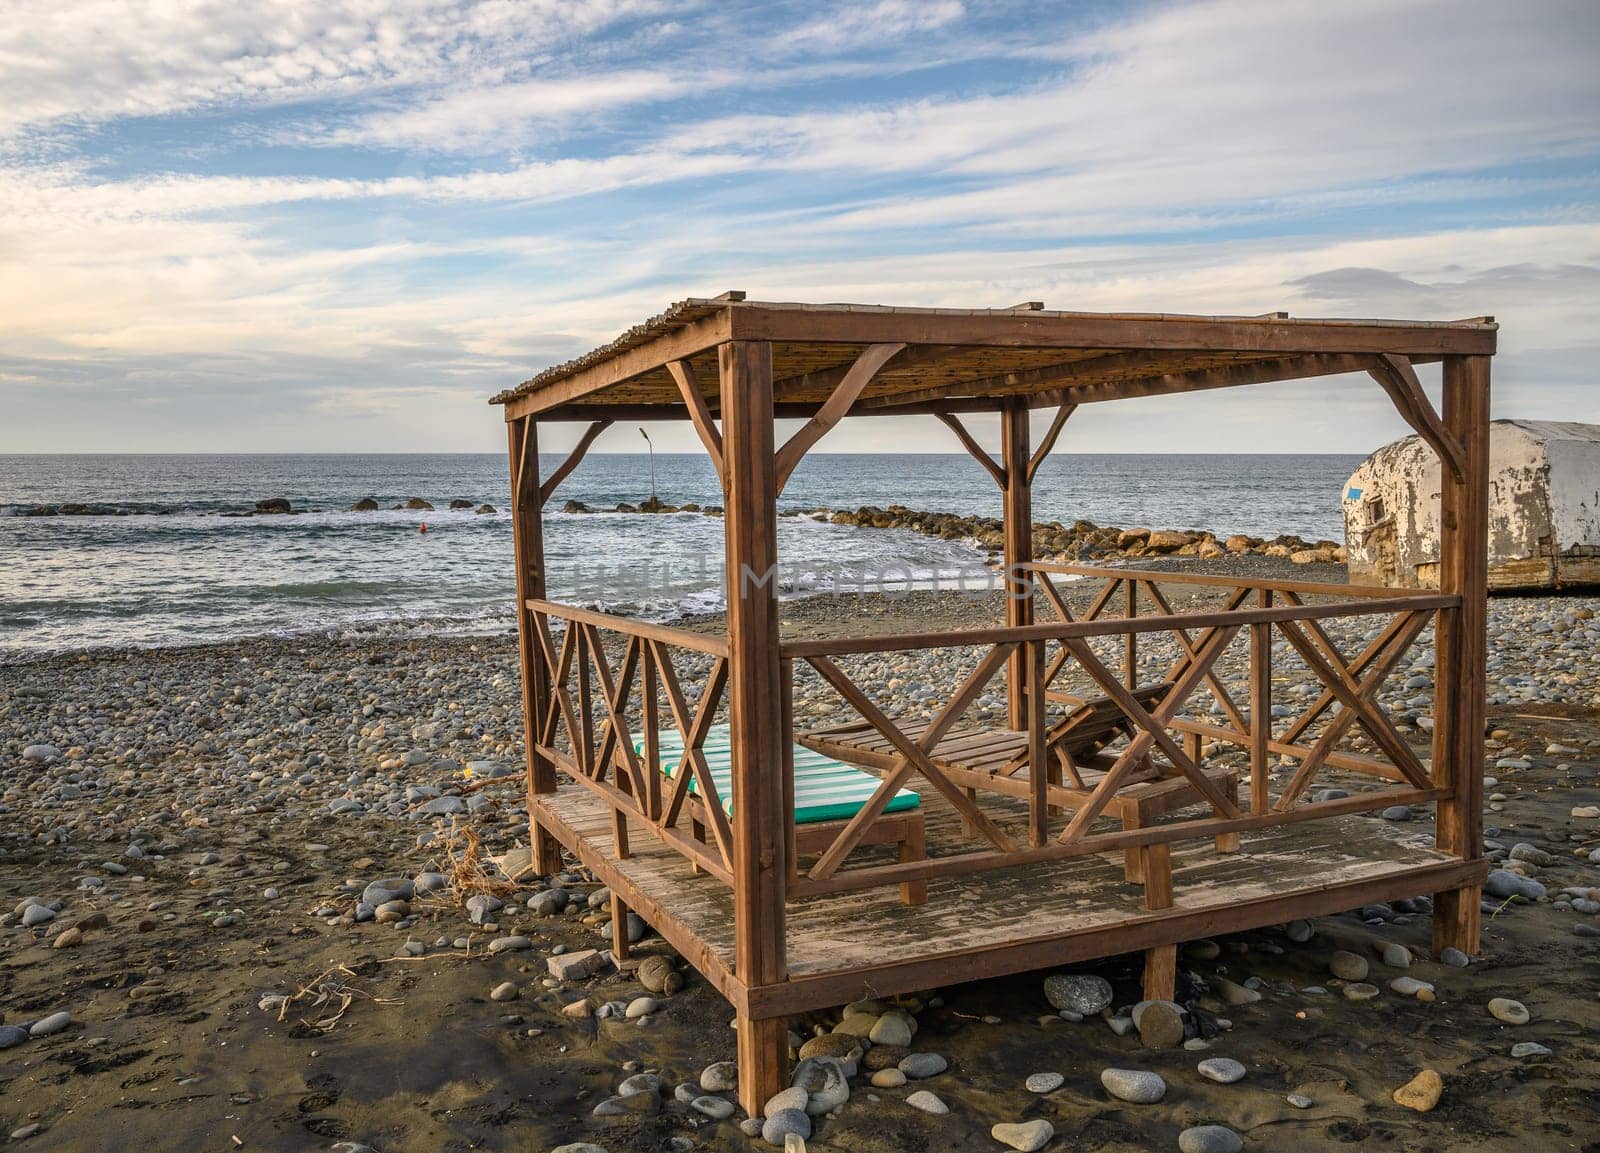 beach gazebo with sun loungers on the Mediterranean beach 1 by Mixa74